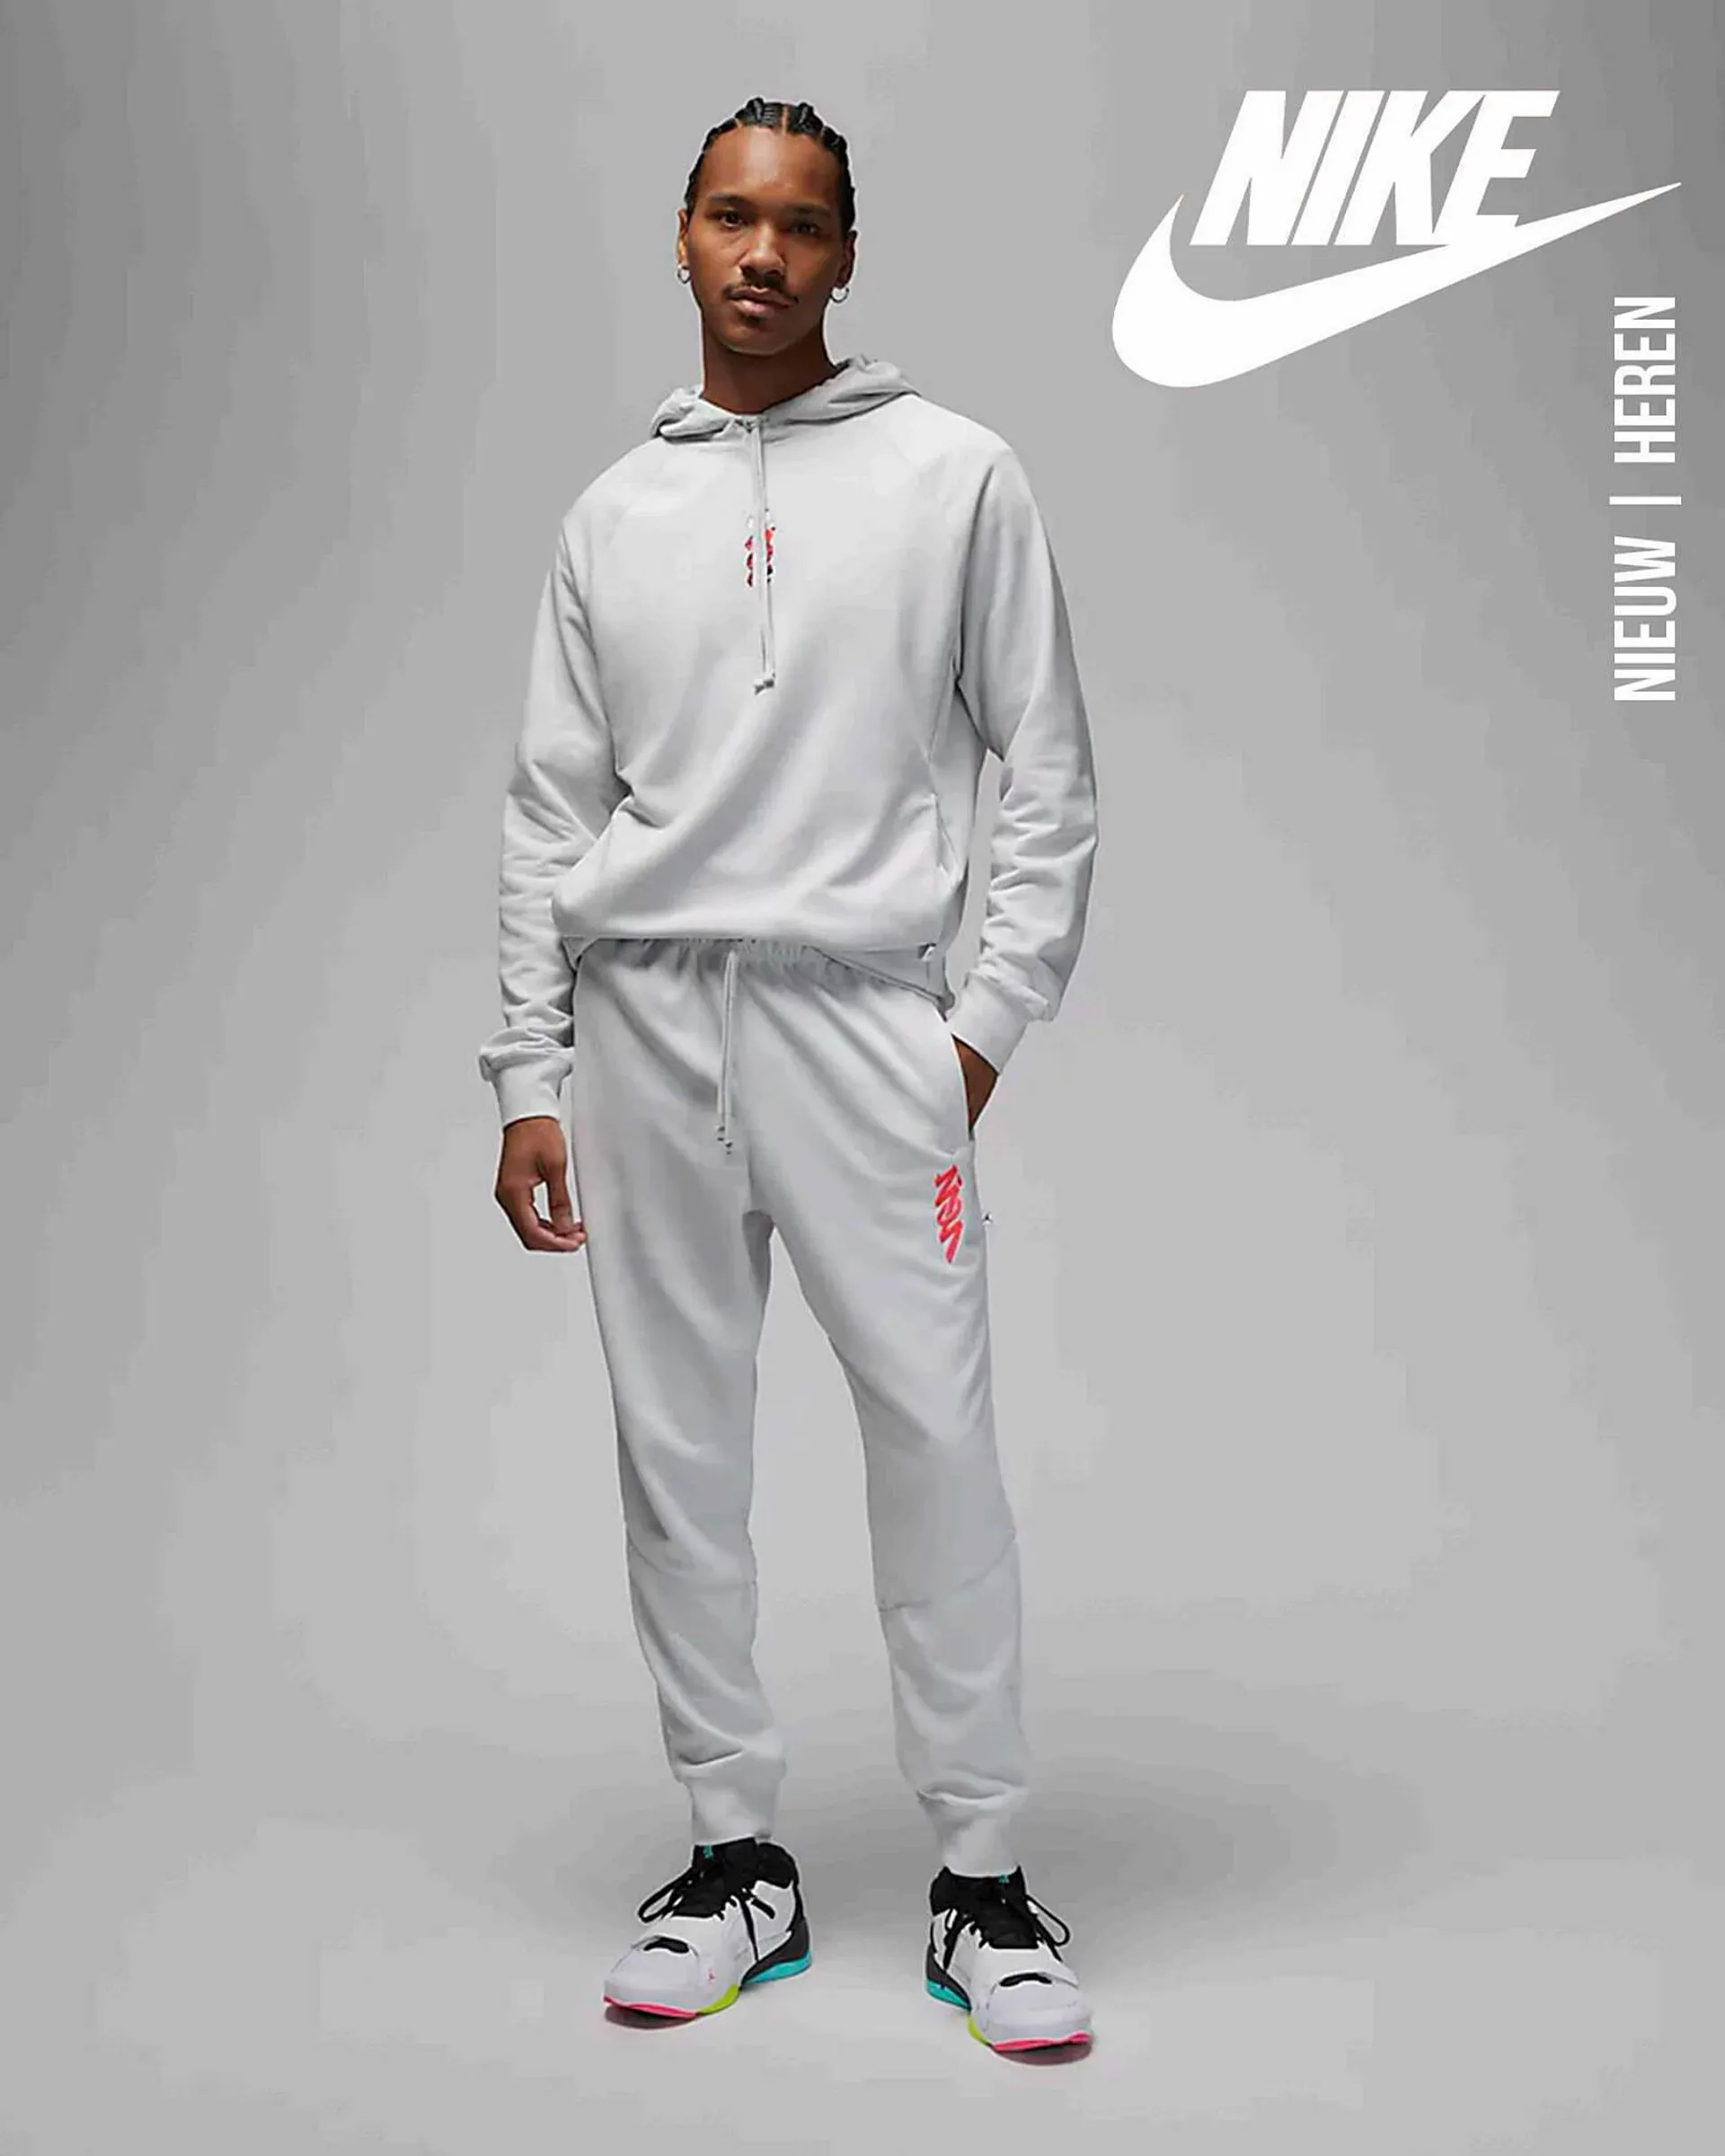 Nike folder - 1